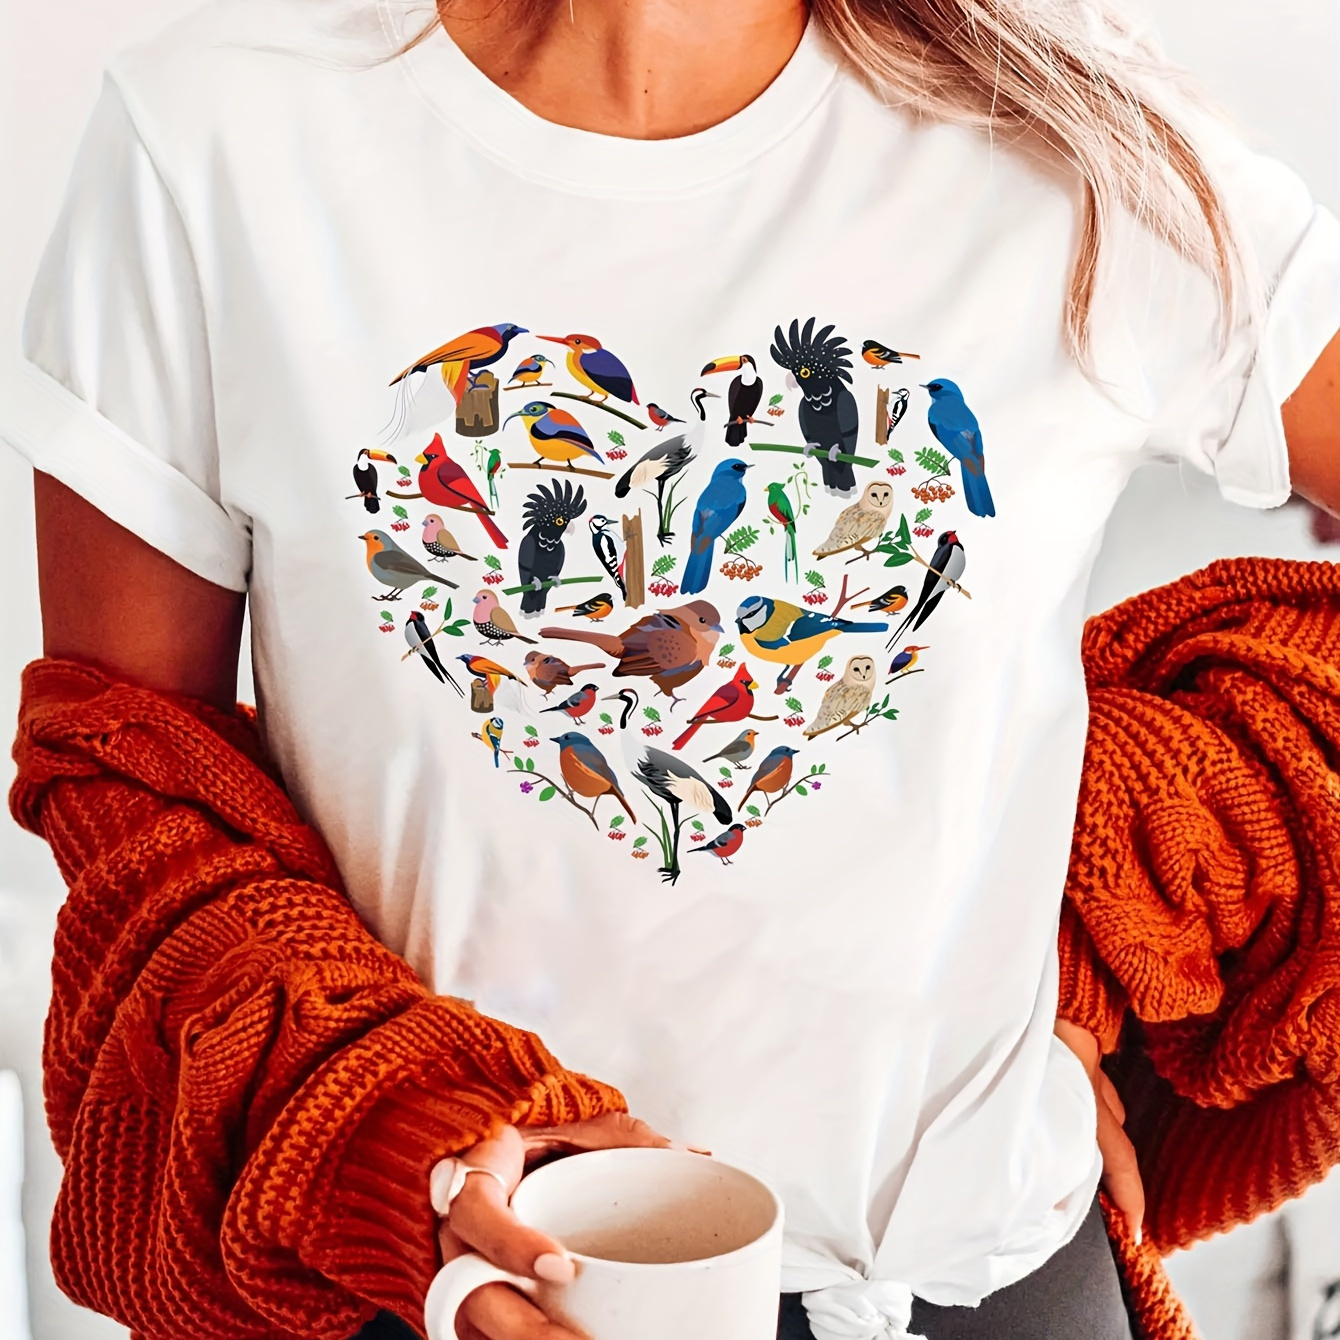 

Birds Heart Print Crew Neck T-shirt, Short Sleeve Casual Top For Summer & Spring, Women's Clothing